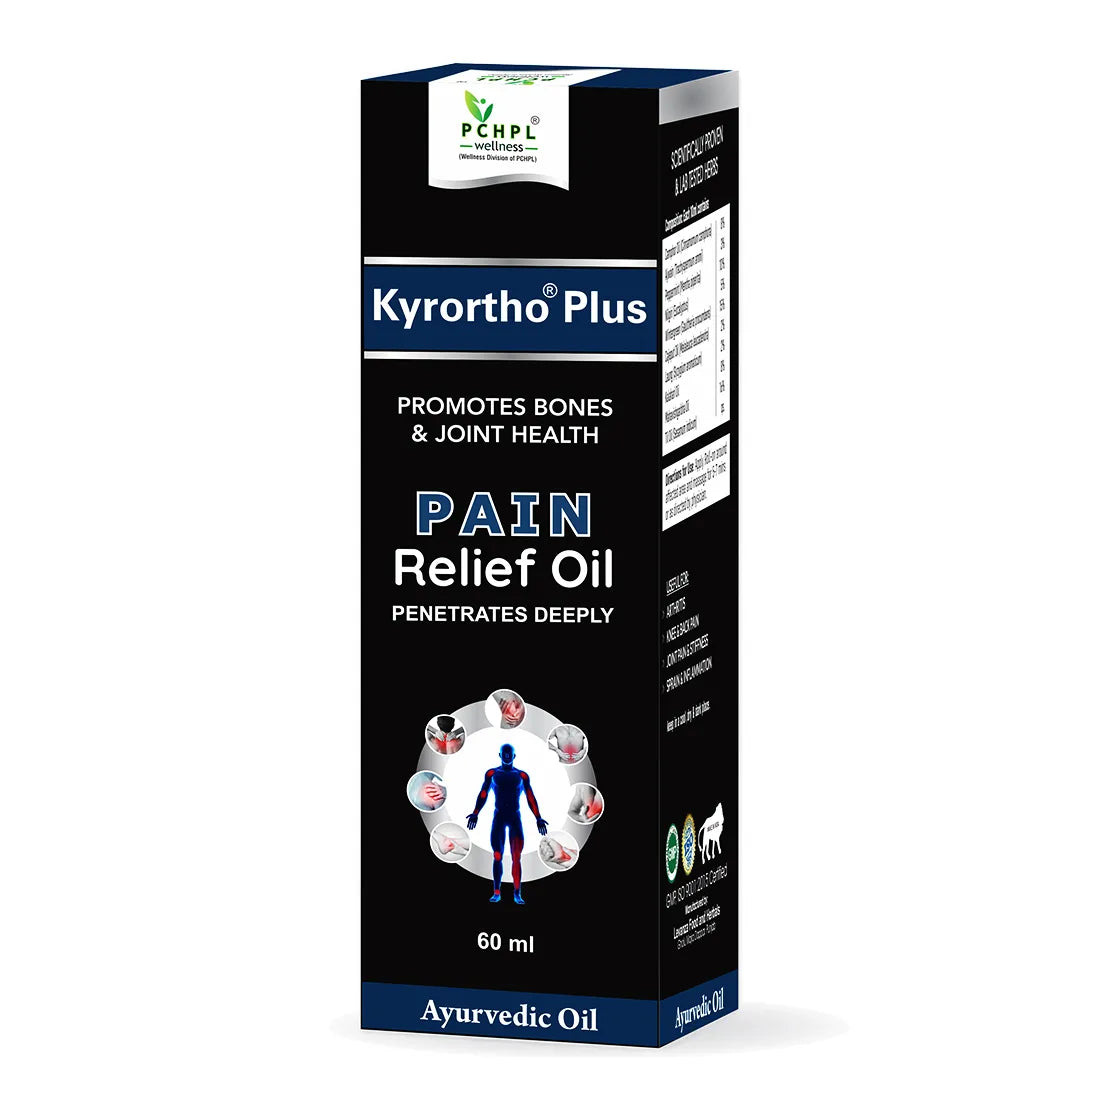 Kyrortho Plus Pain Relief Oil | Sehatokart